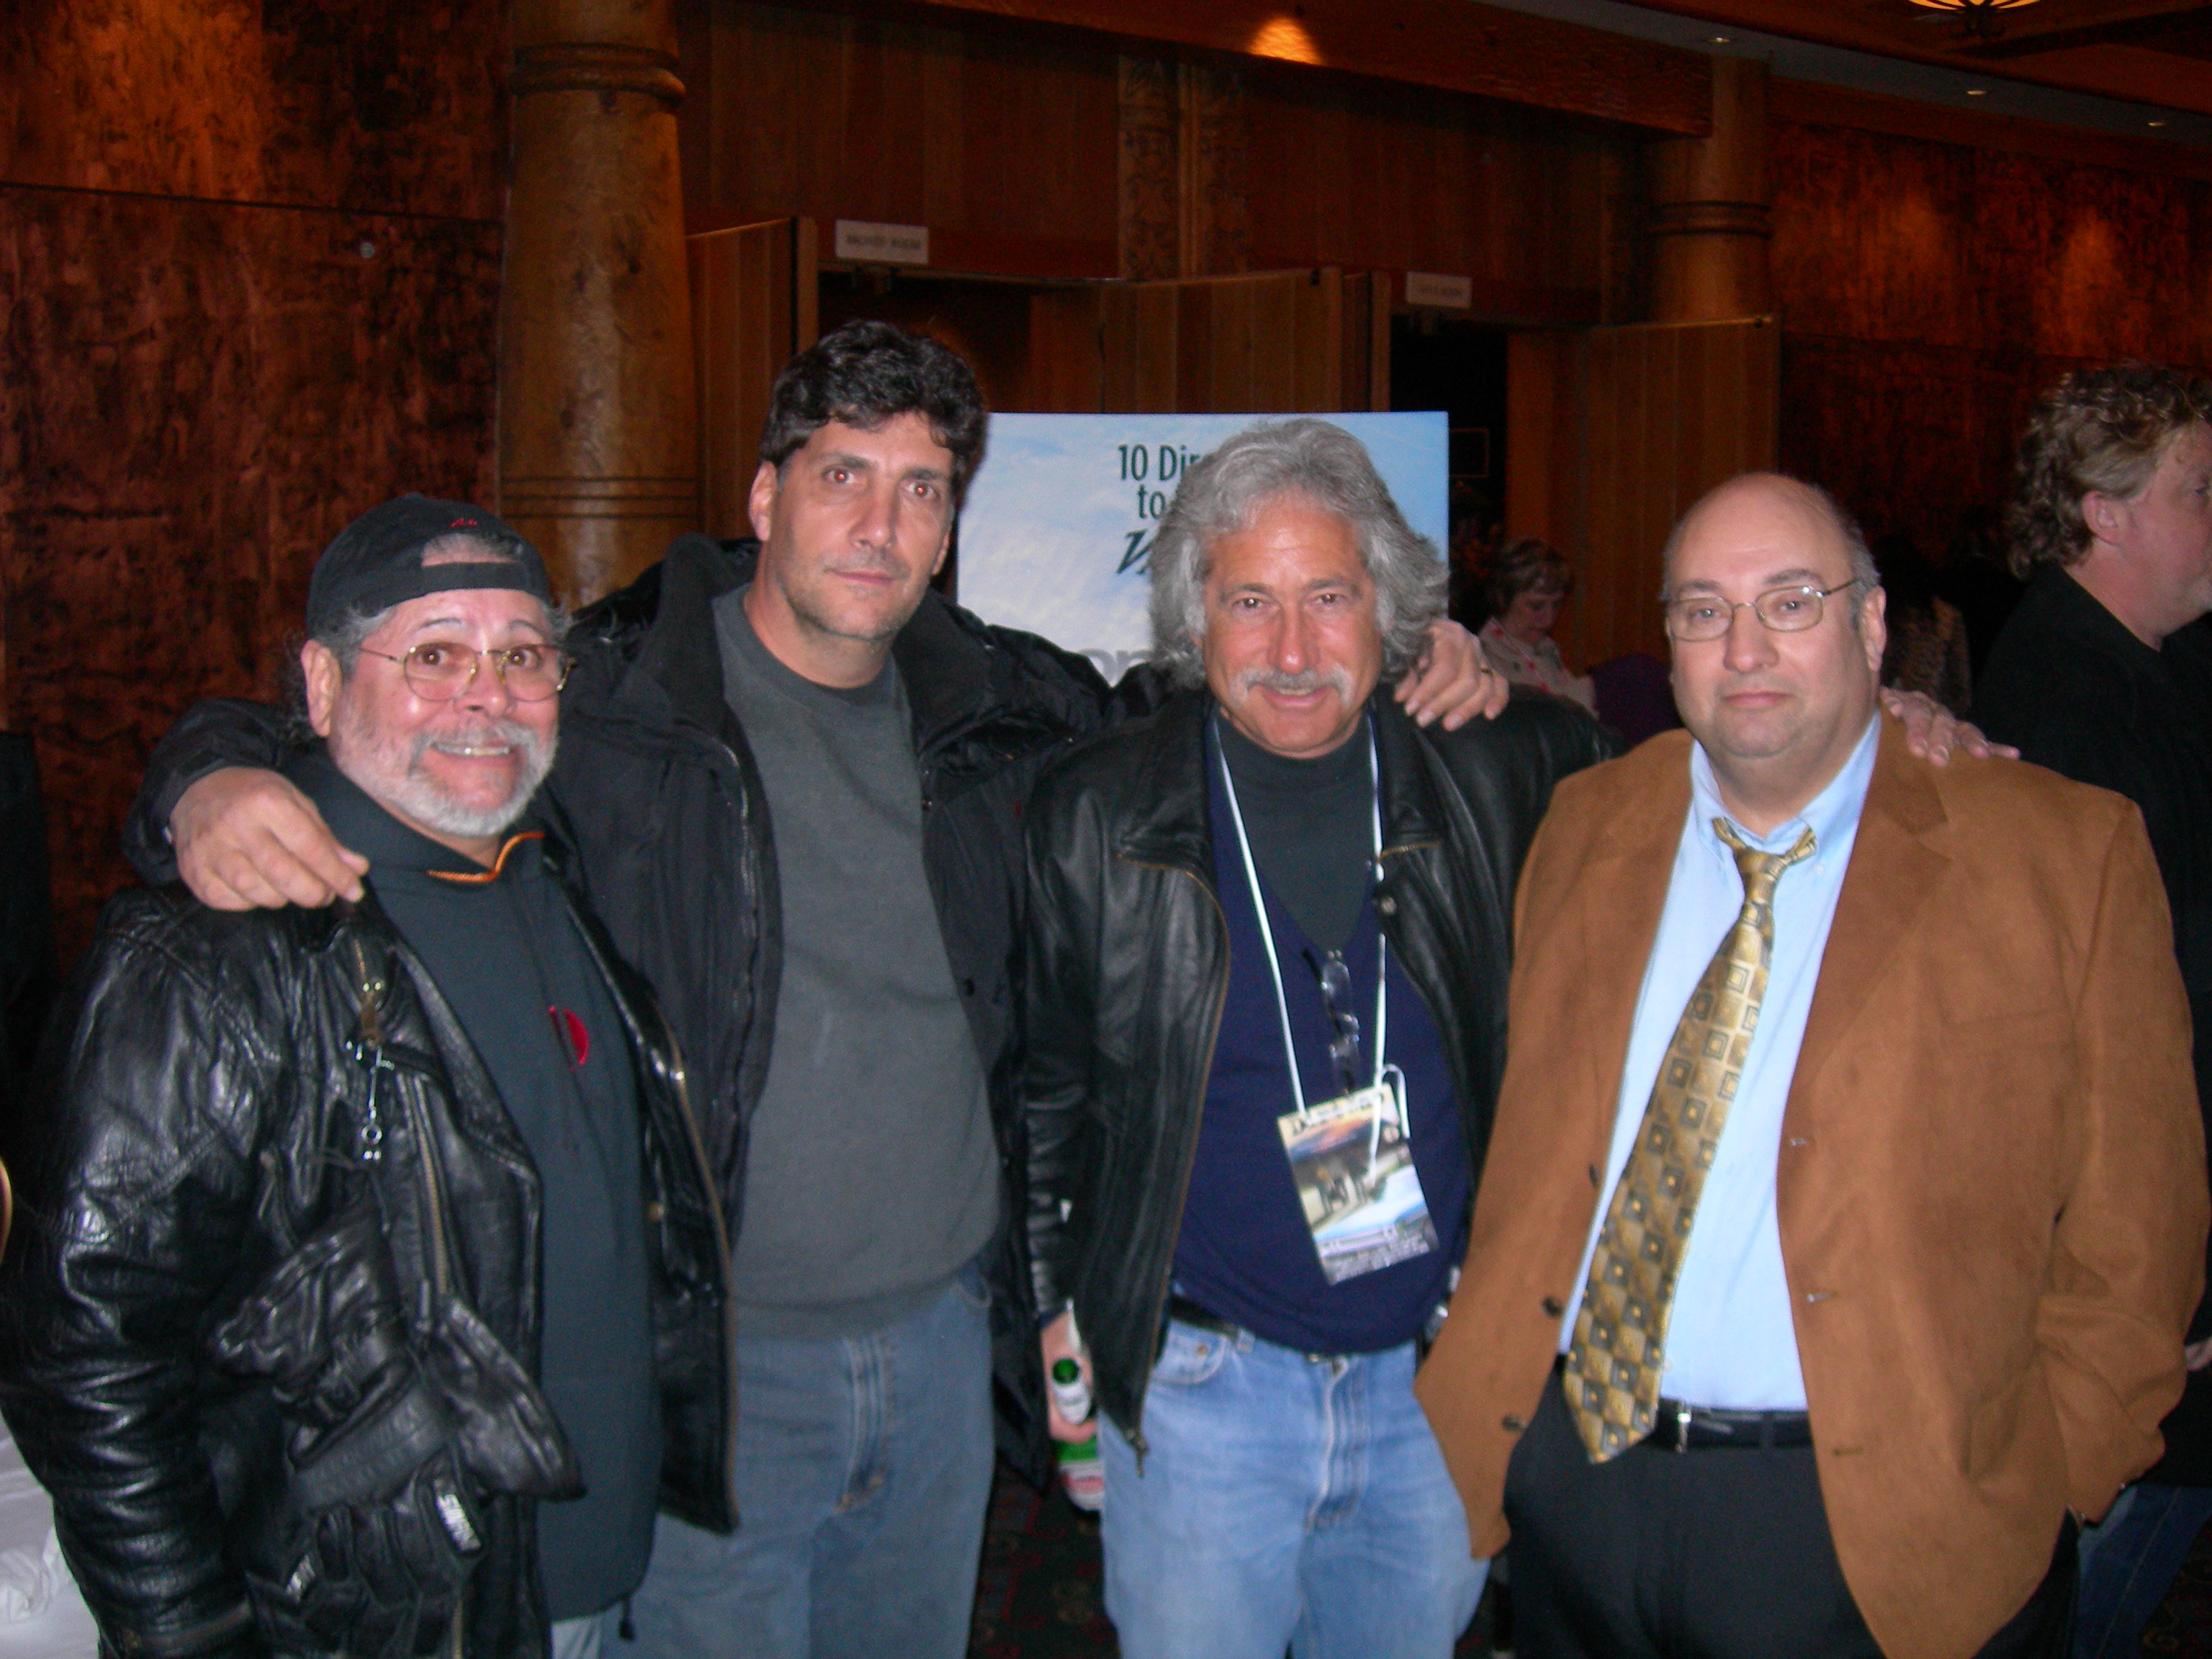 Al Paez, Steven Scaffidi, Harris Tulchin, and Warden Donald Cabana at the Sundance Film Festival.